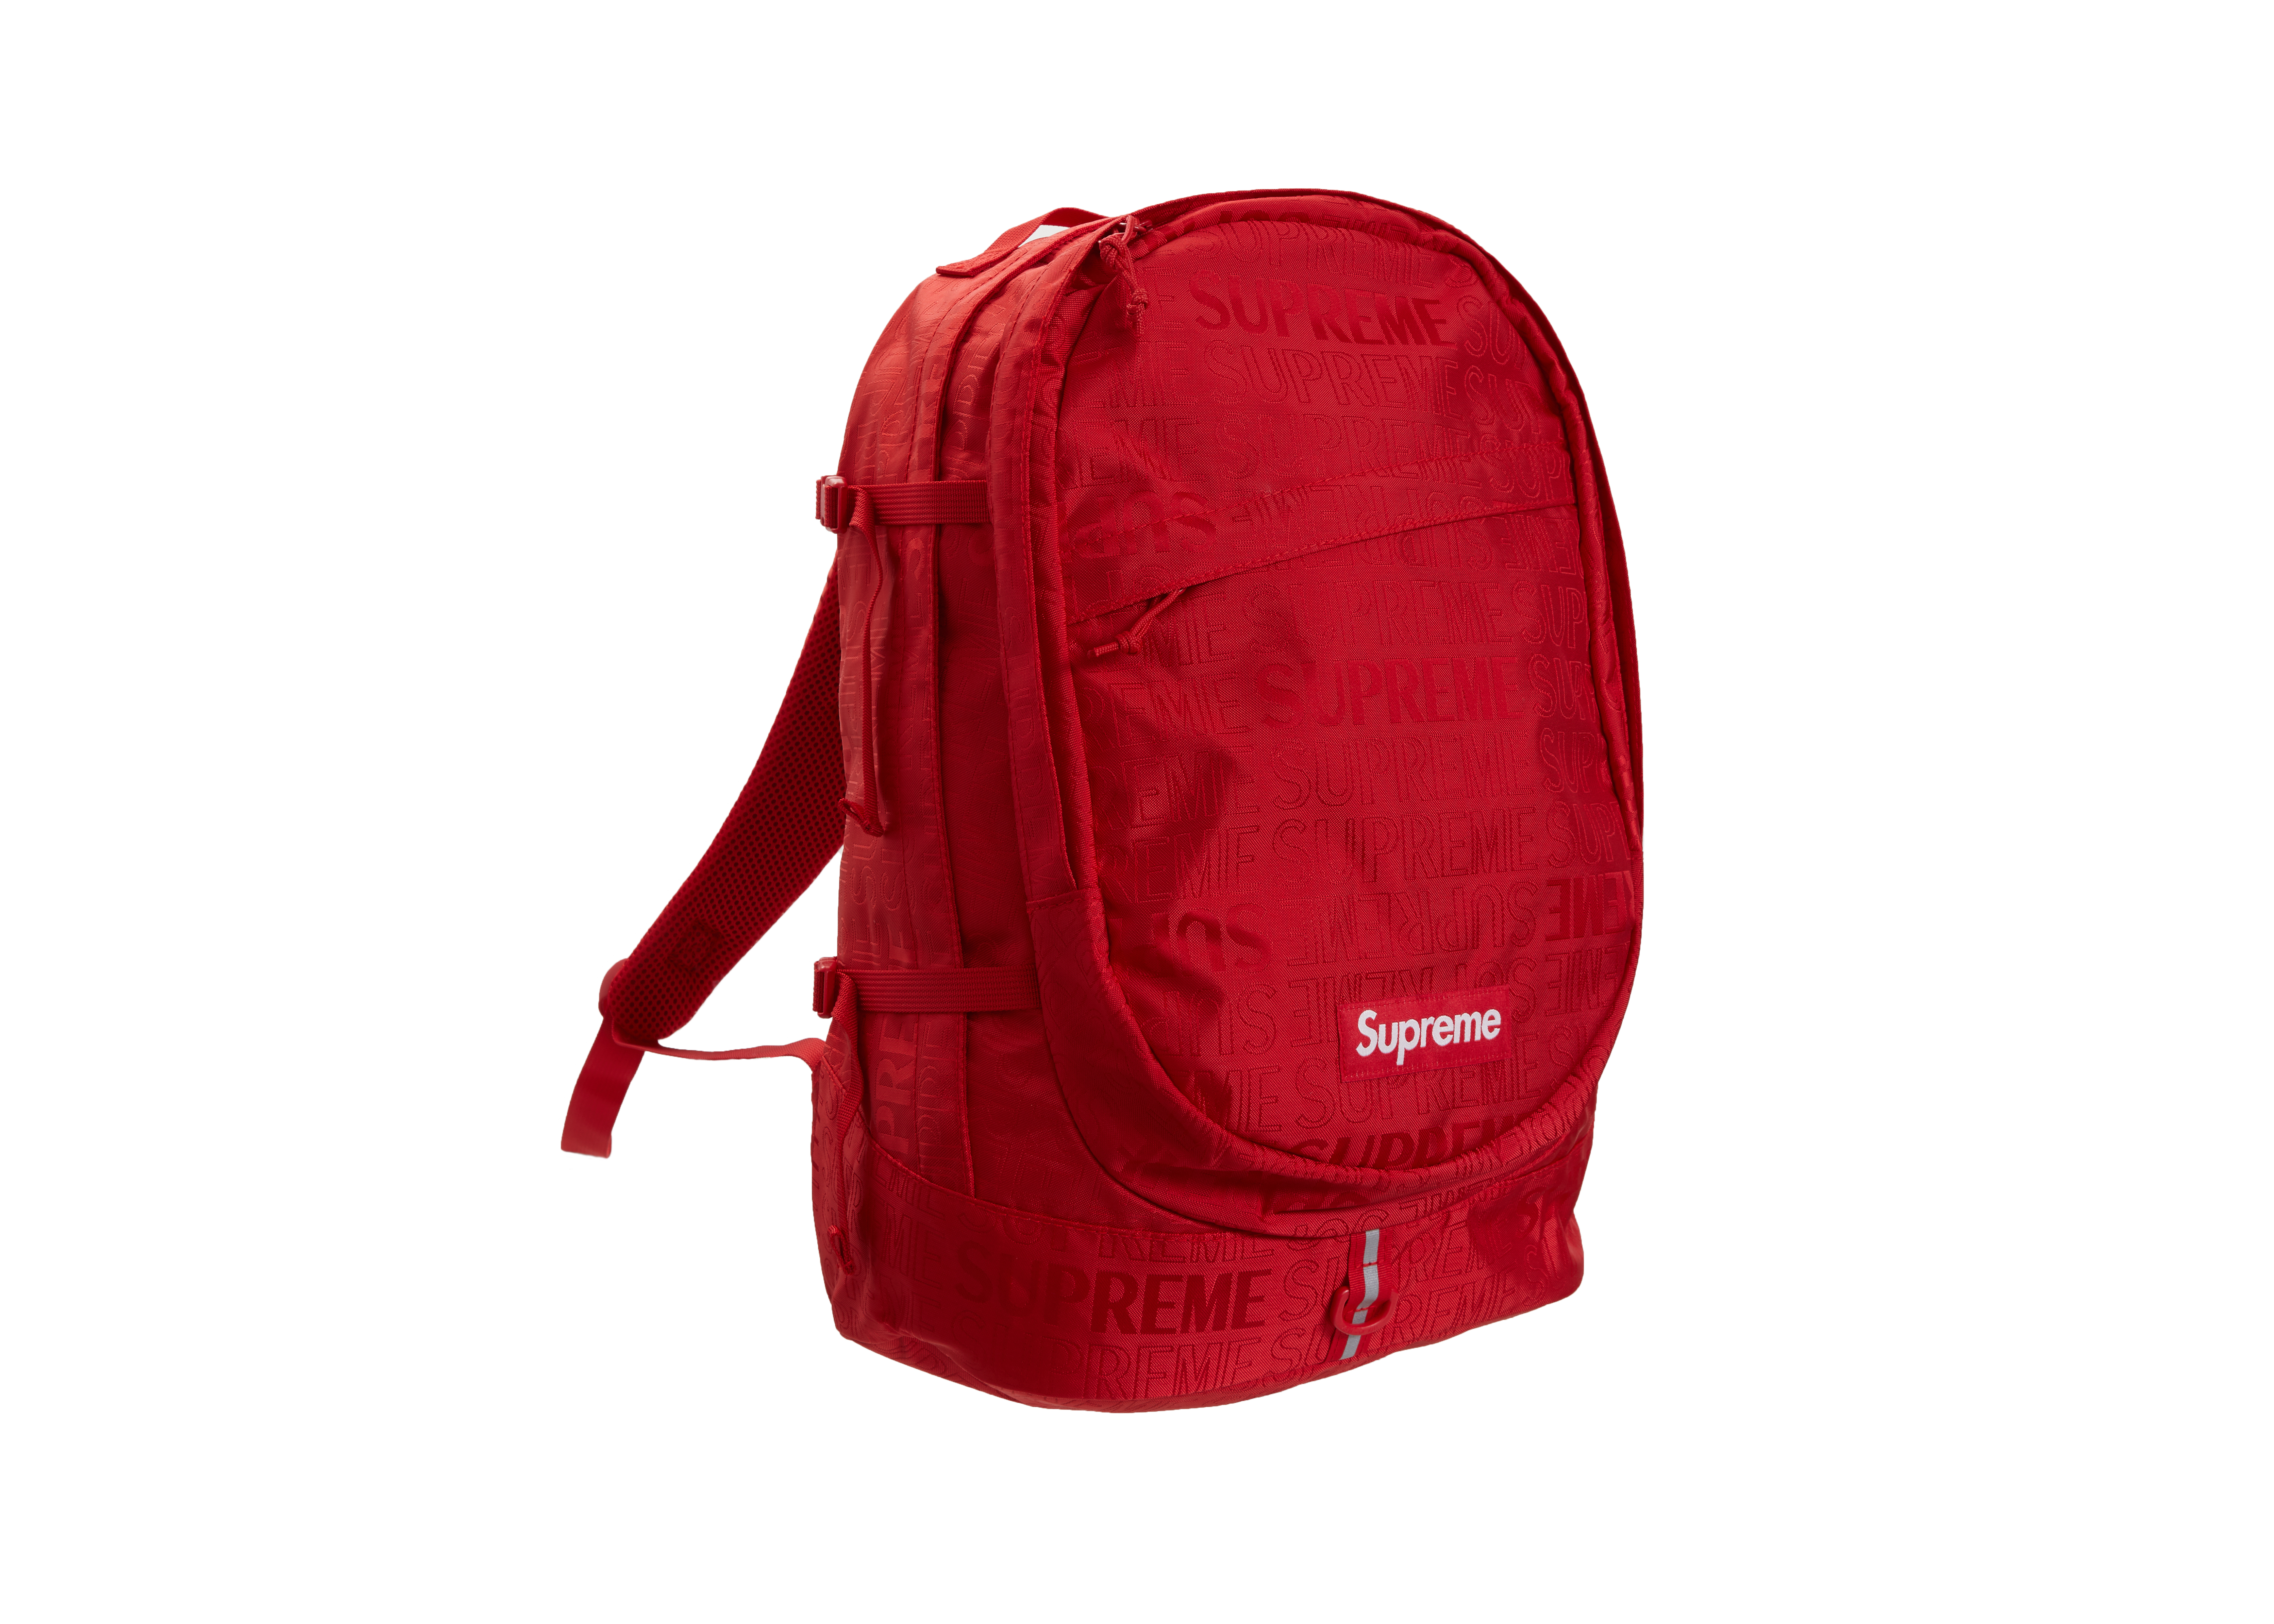 supreme bag cost